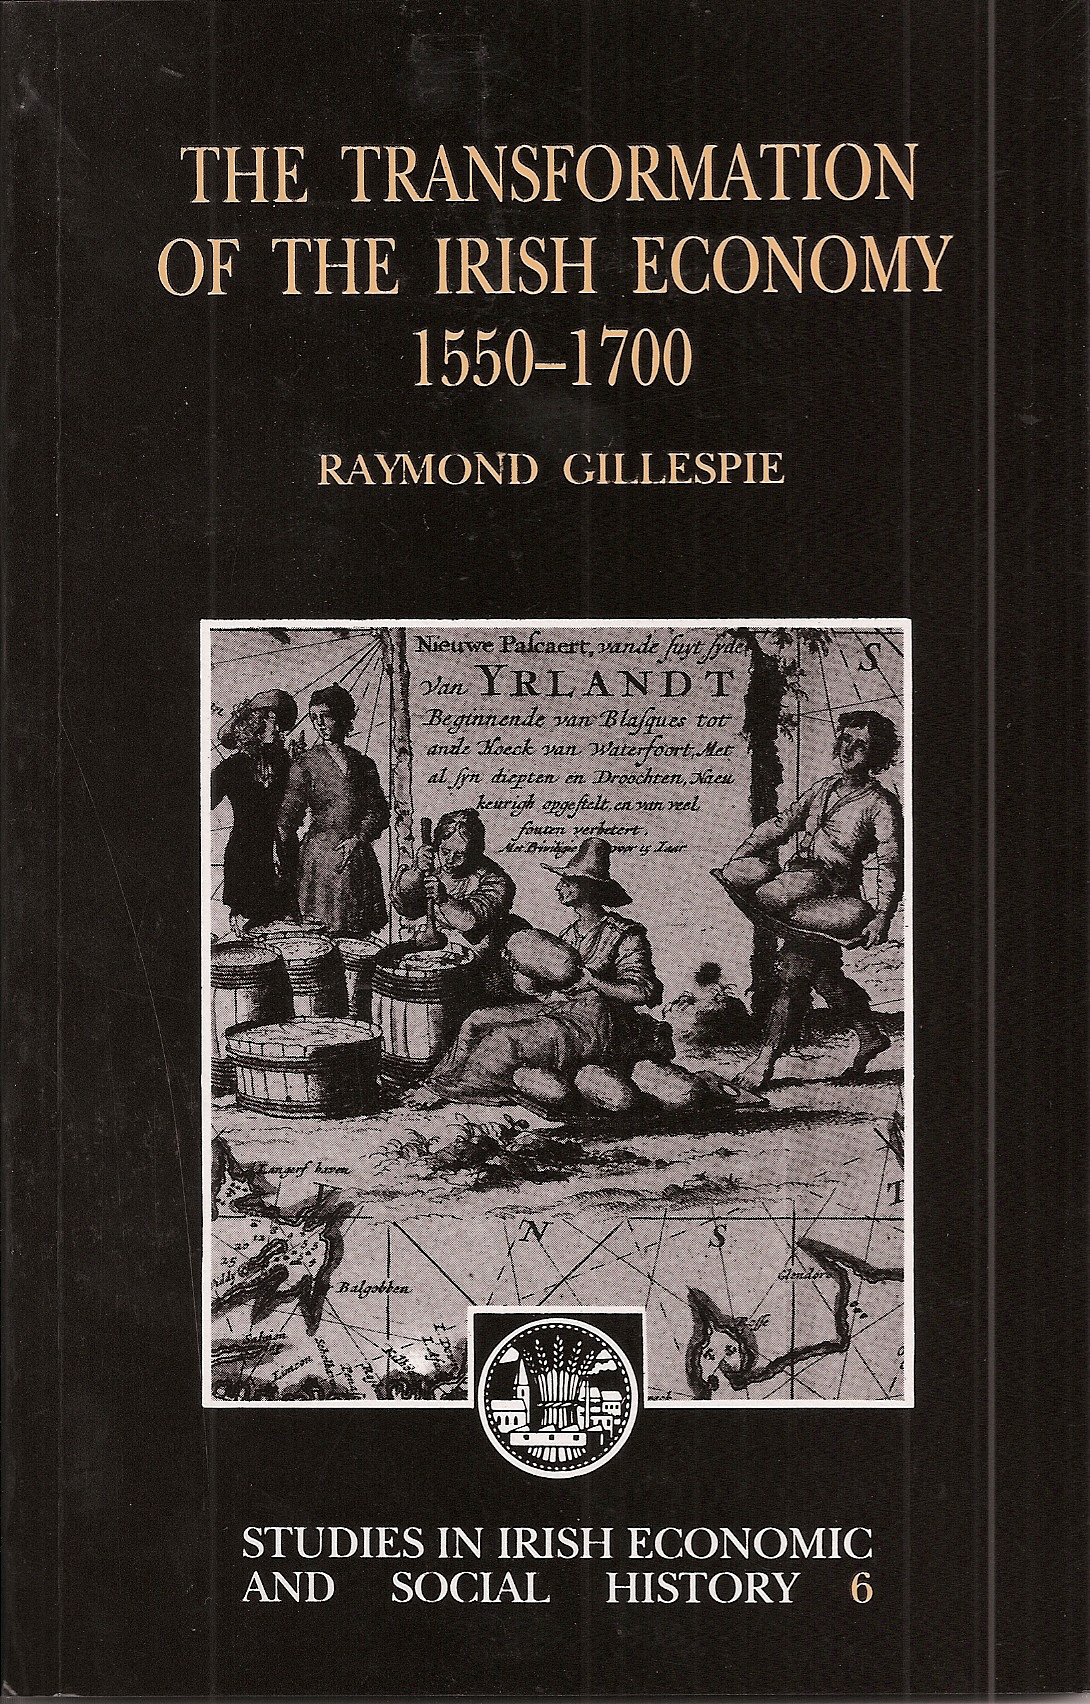 The Transformation of the Irish Economy 1550-1700